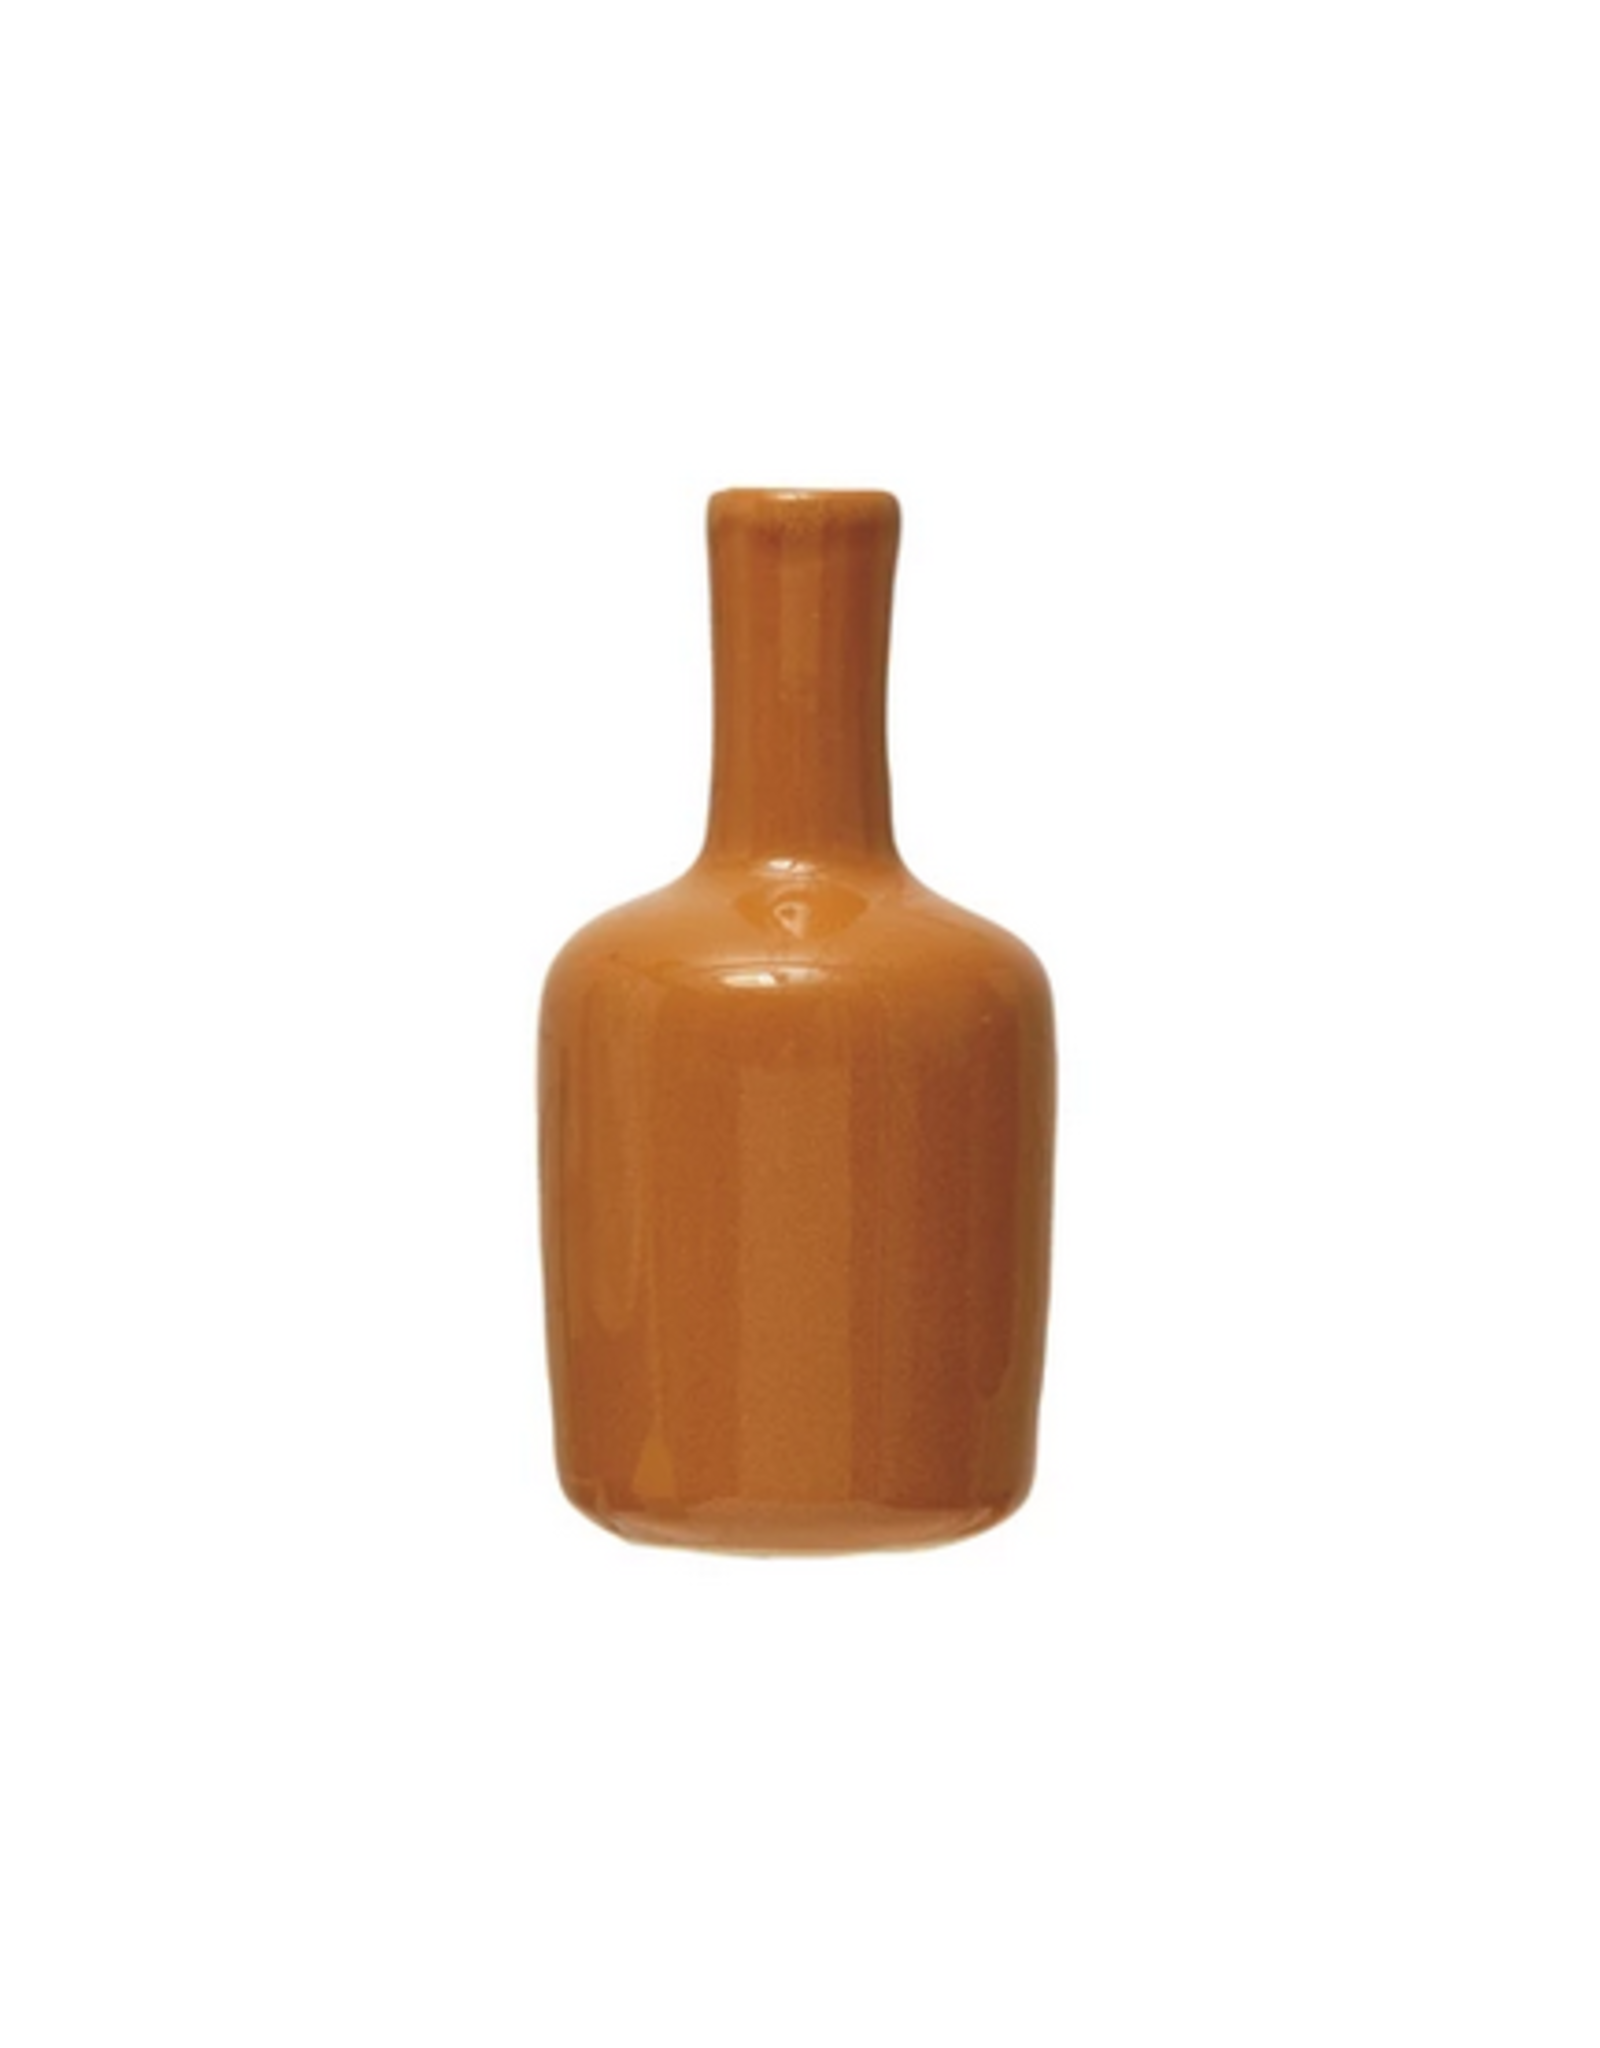 Marigold Reactive Glaze Vase - Medium